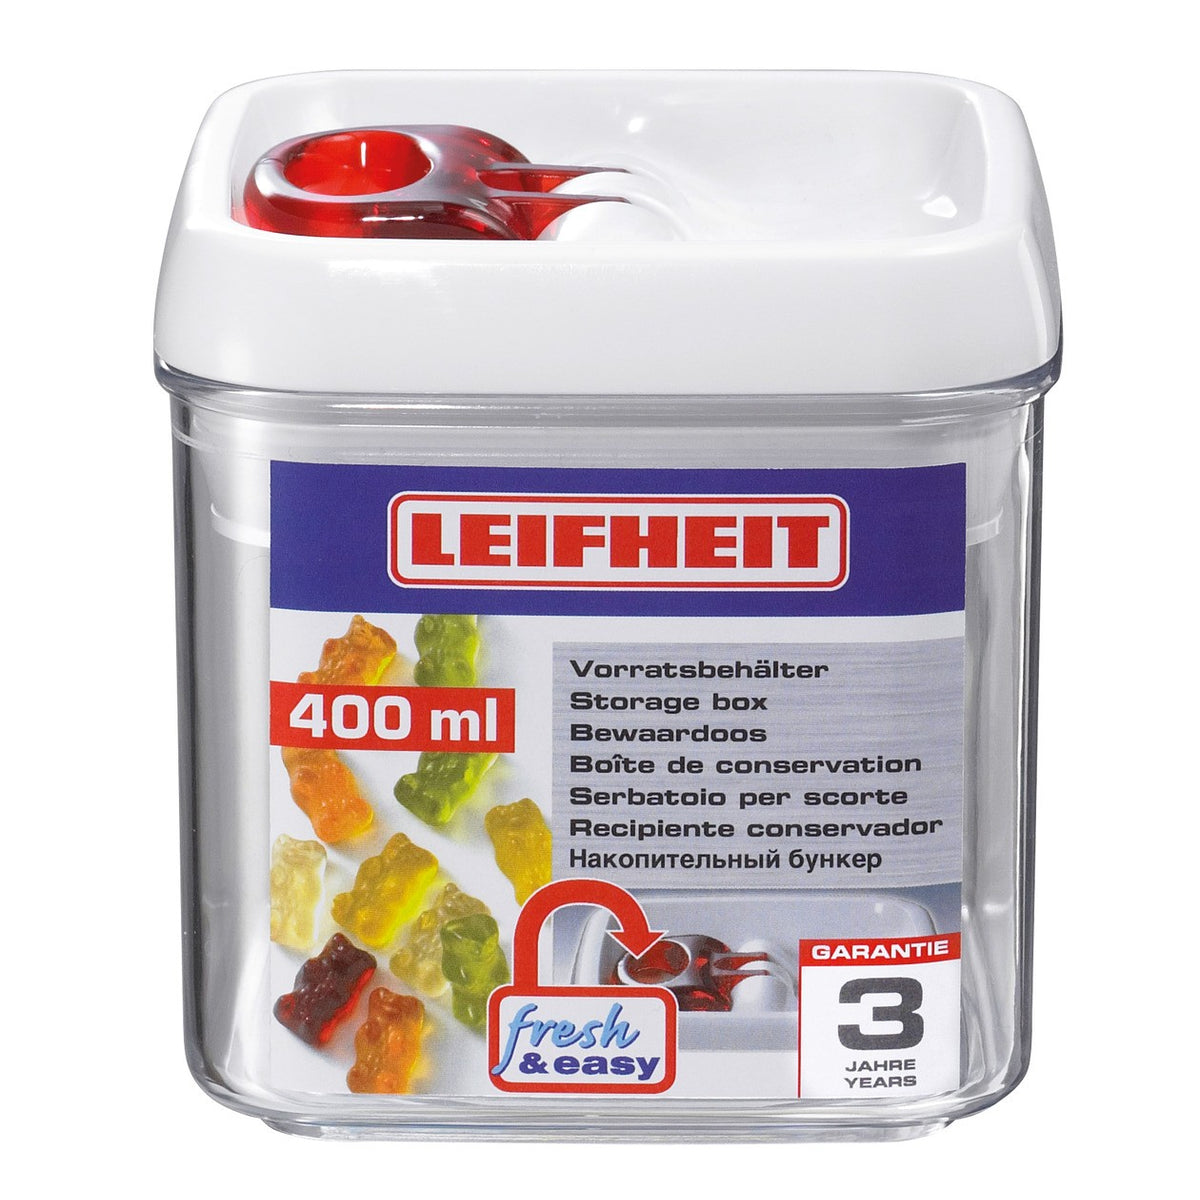 Contenedor fresh & Easy 400 G Leifheit 31207